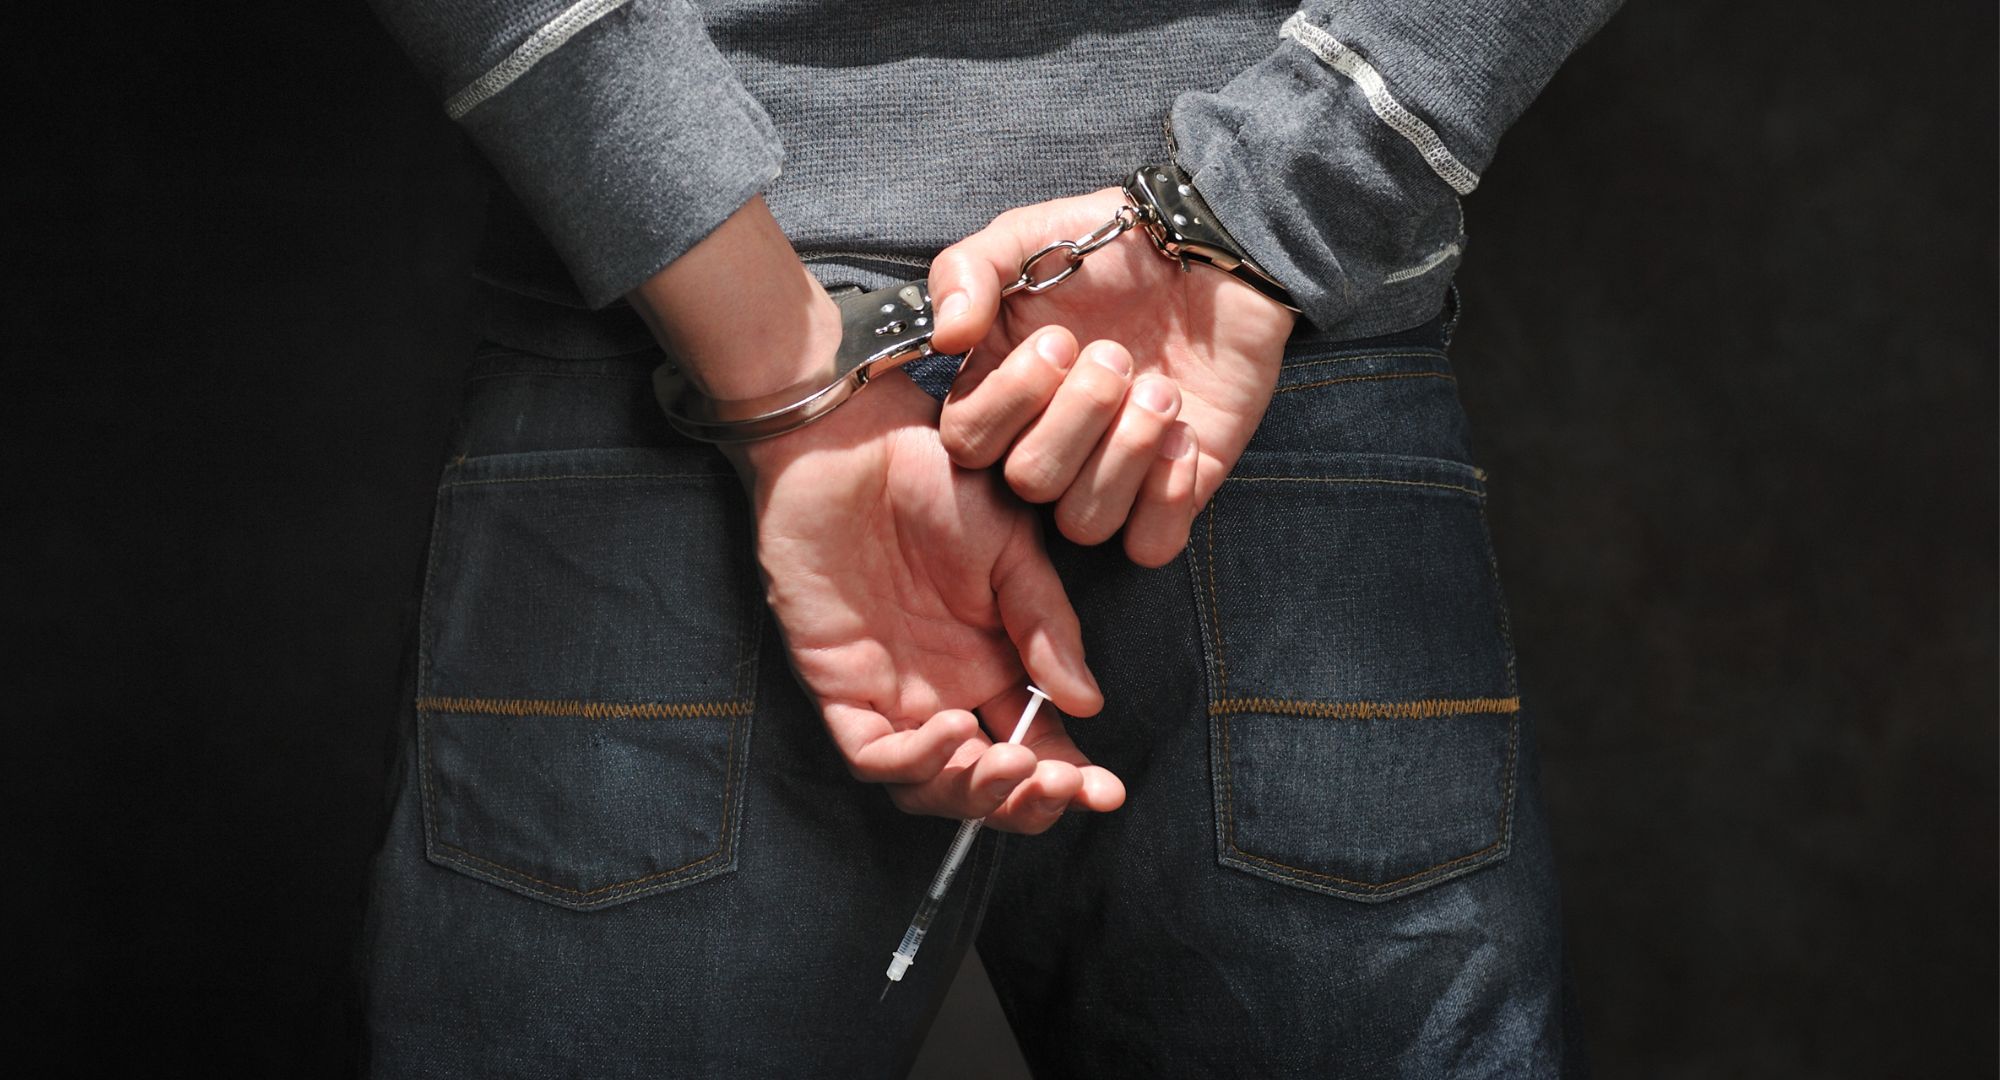 bail for possessing drugs - overview